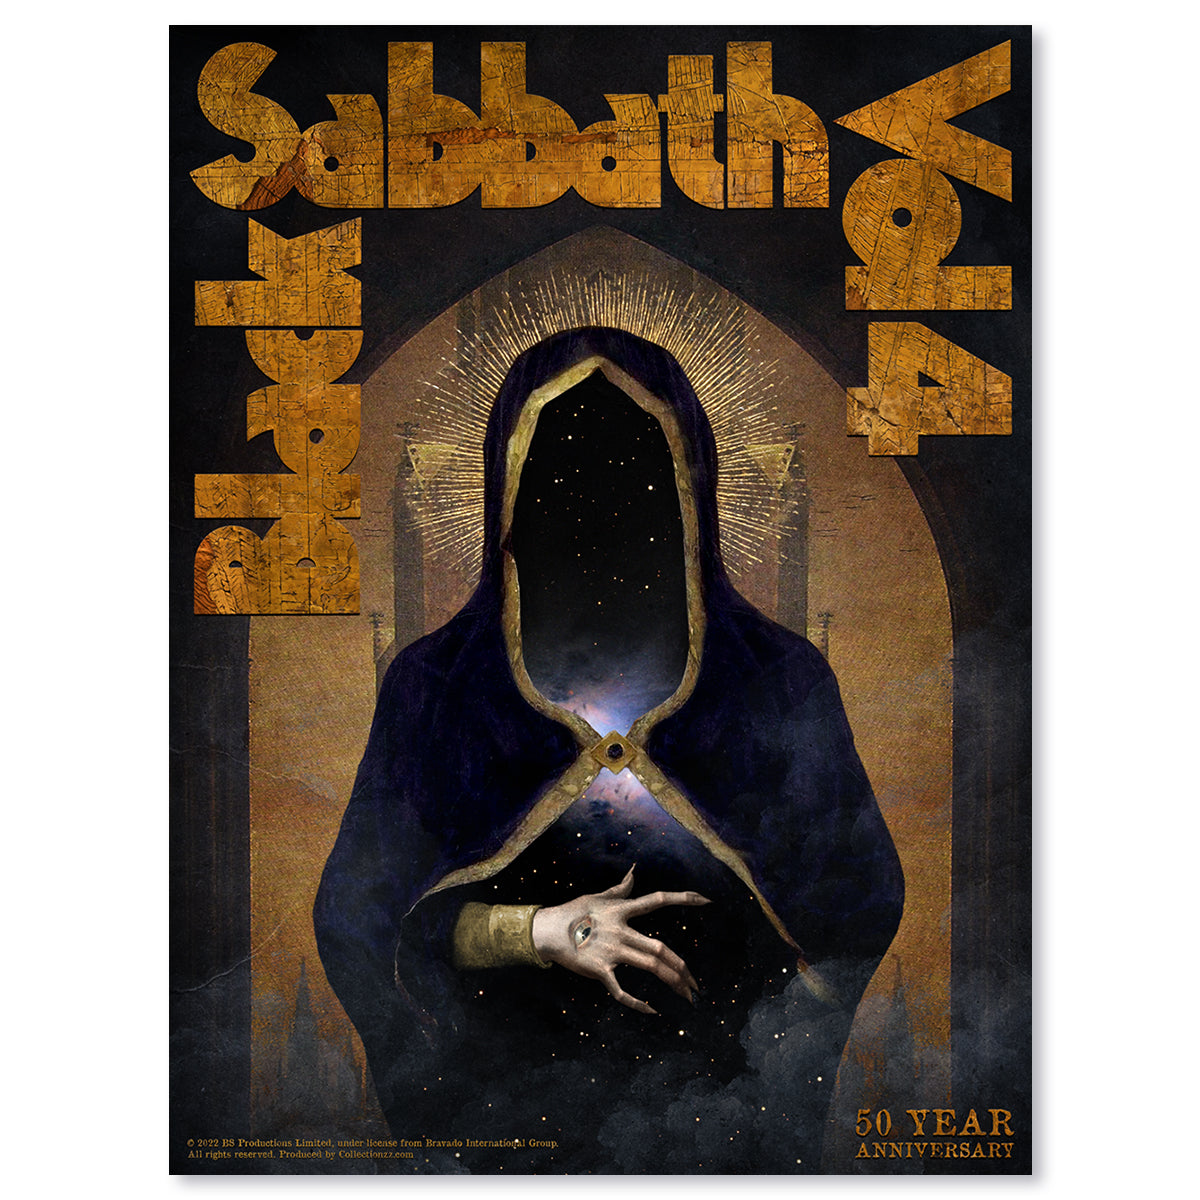 Black Sabbath Vol. 4 50th Anniversary (Gold Foil)